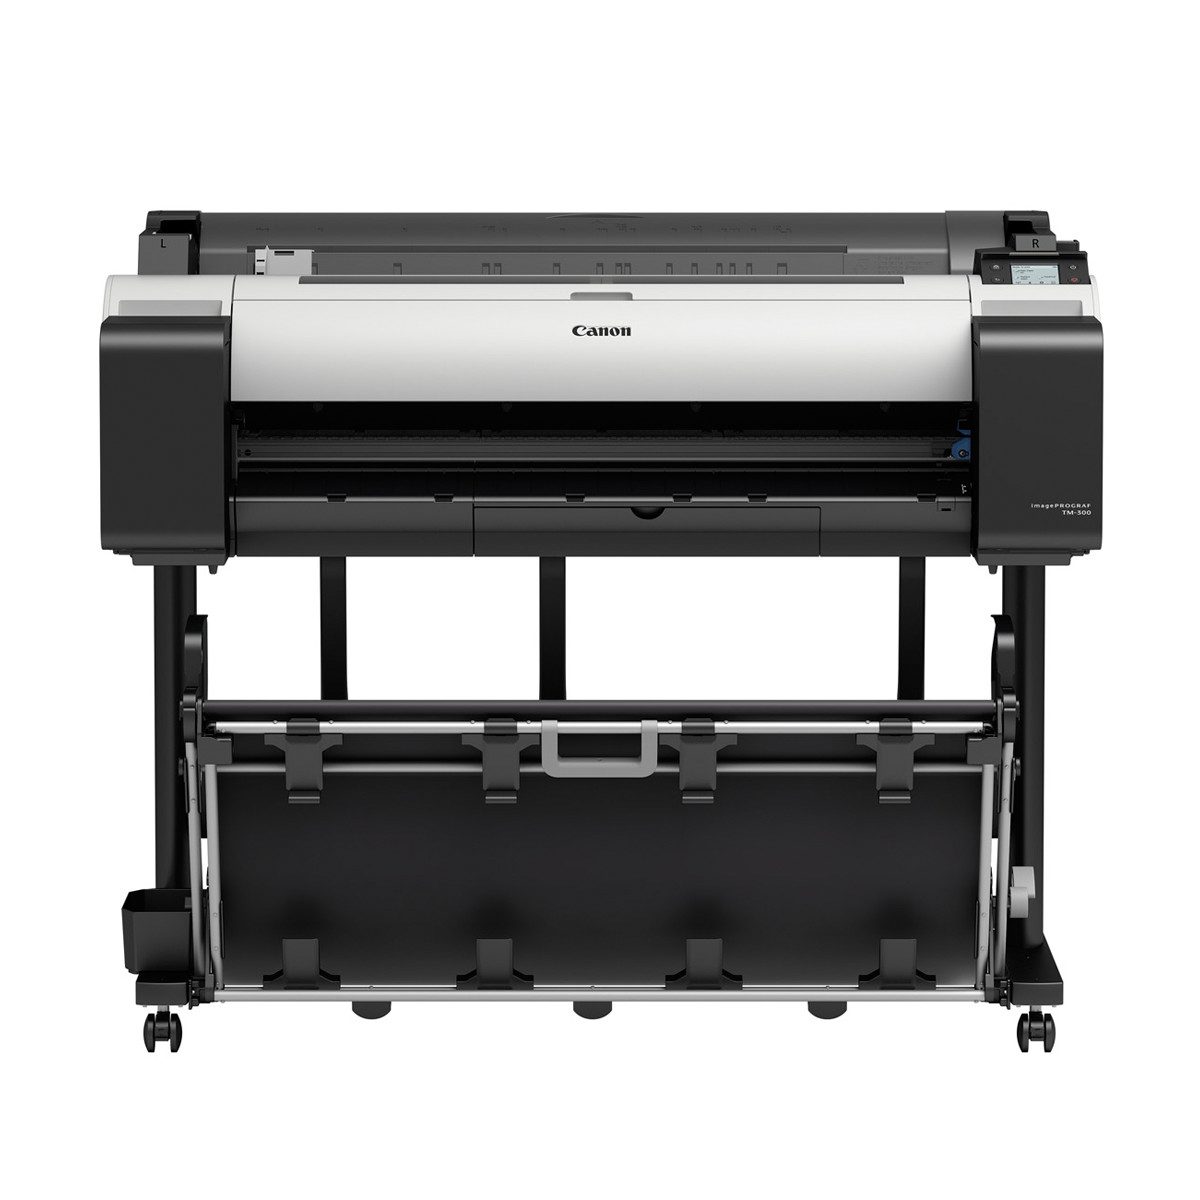 Canon imagepro TM300 Printer